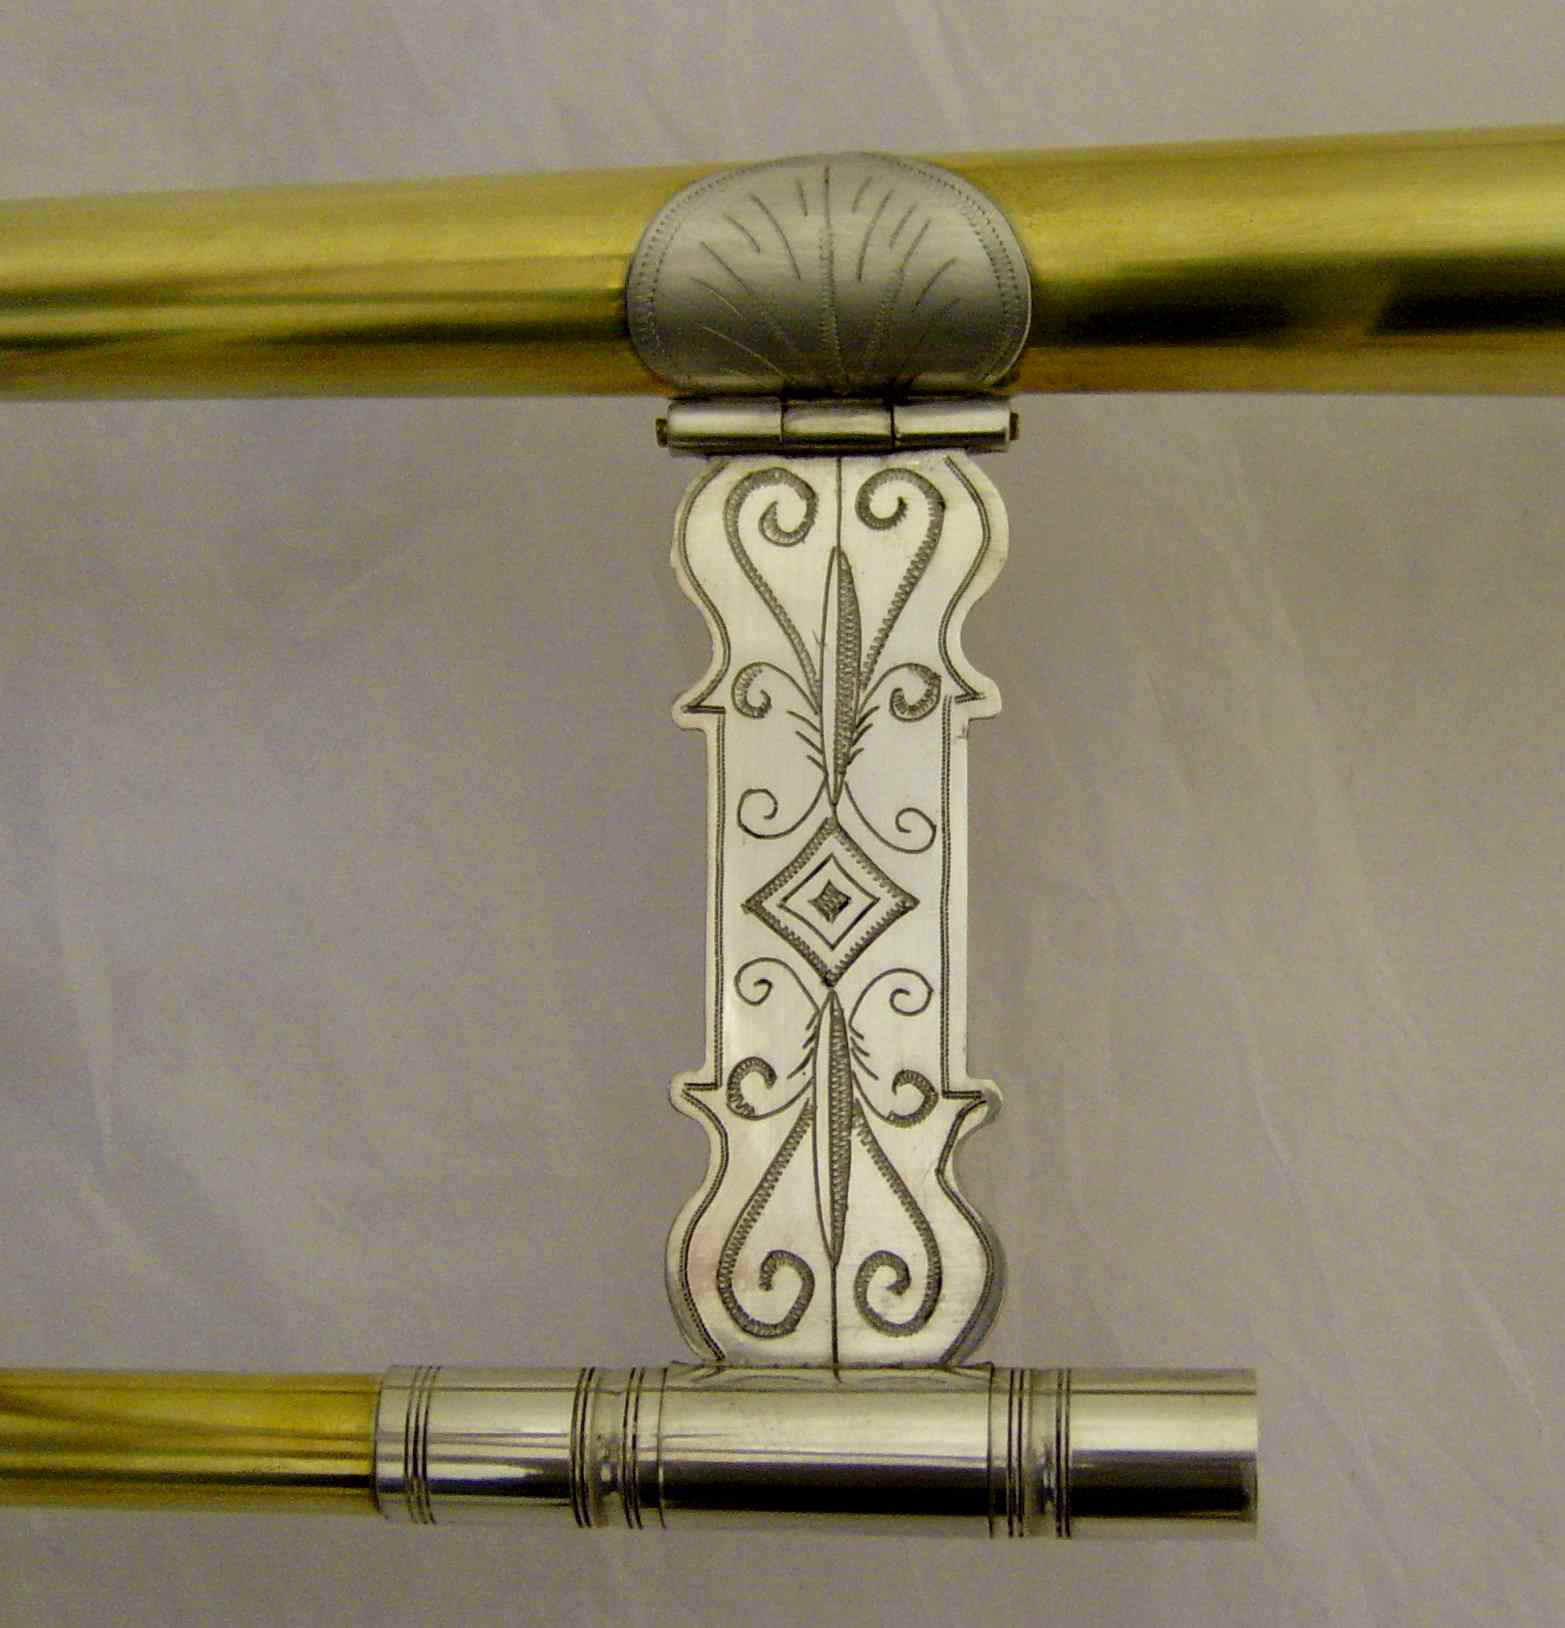 Korpus Quersteg aus Sterling Silber (925)